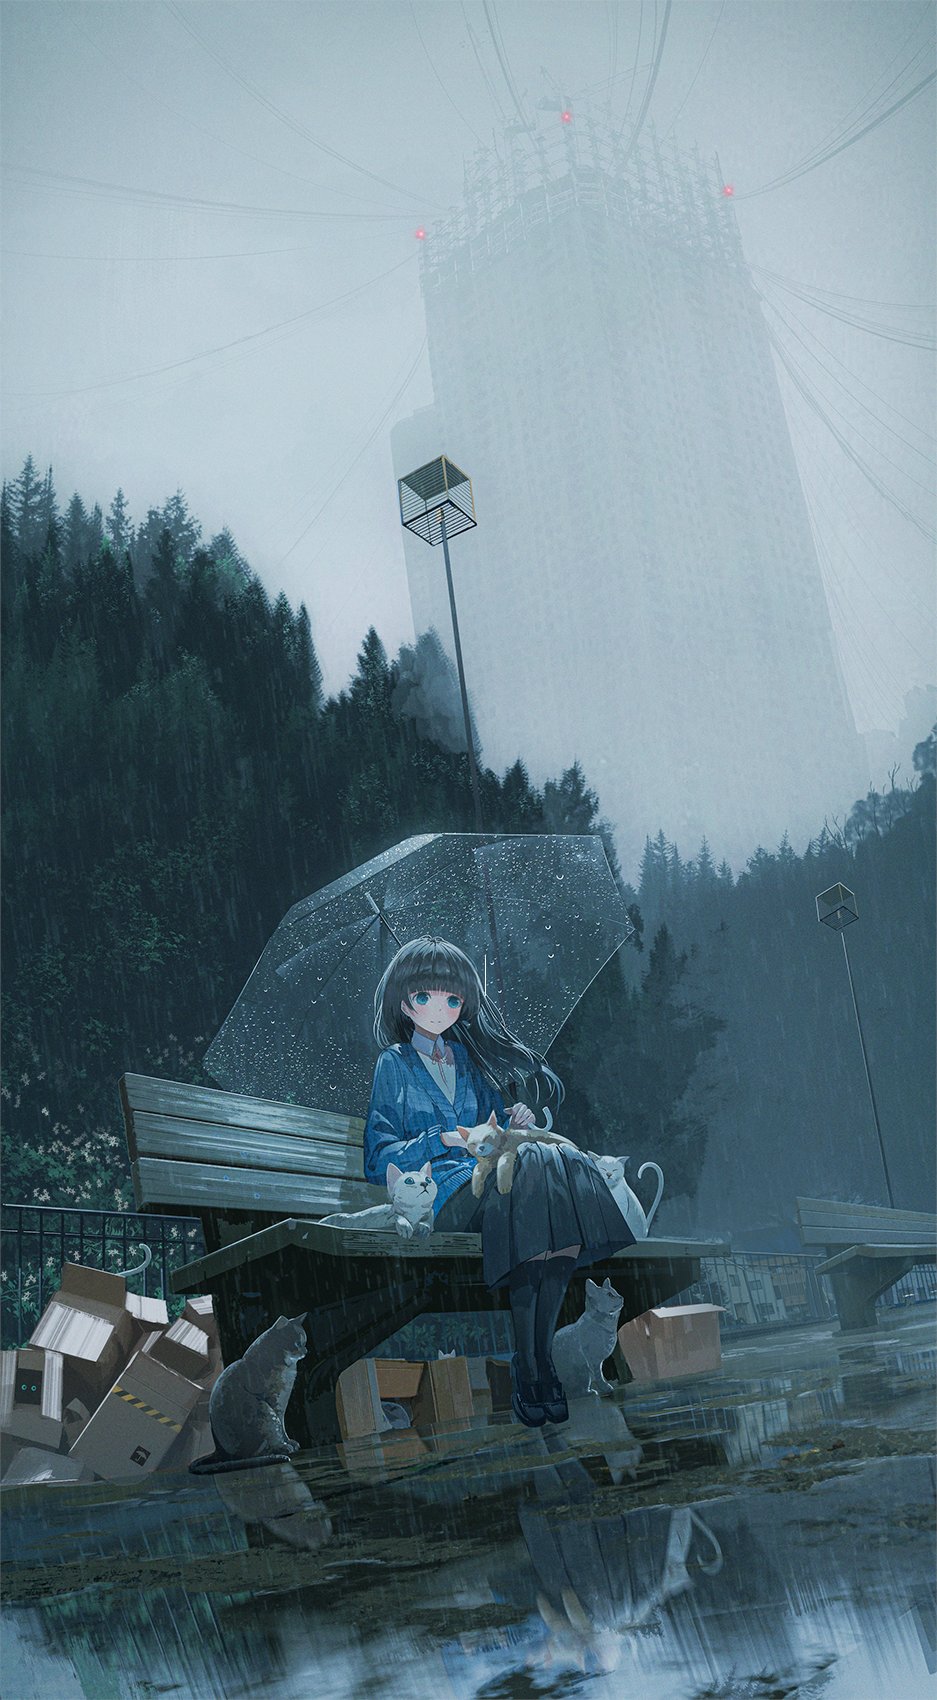 Chocoshi Looking At Viewer Portrait Display On Bench Rain Cats Water Reflection Cardboard Box Women  937x1700